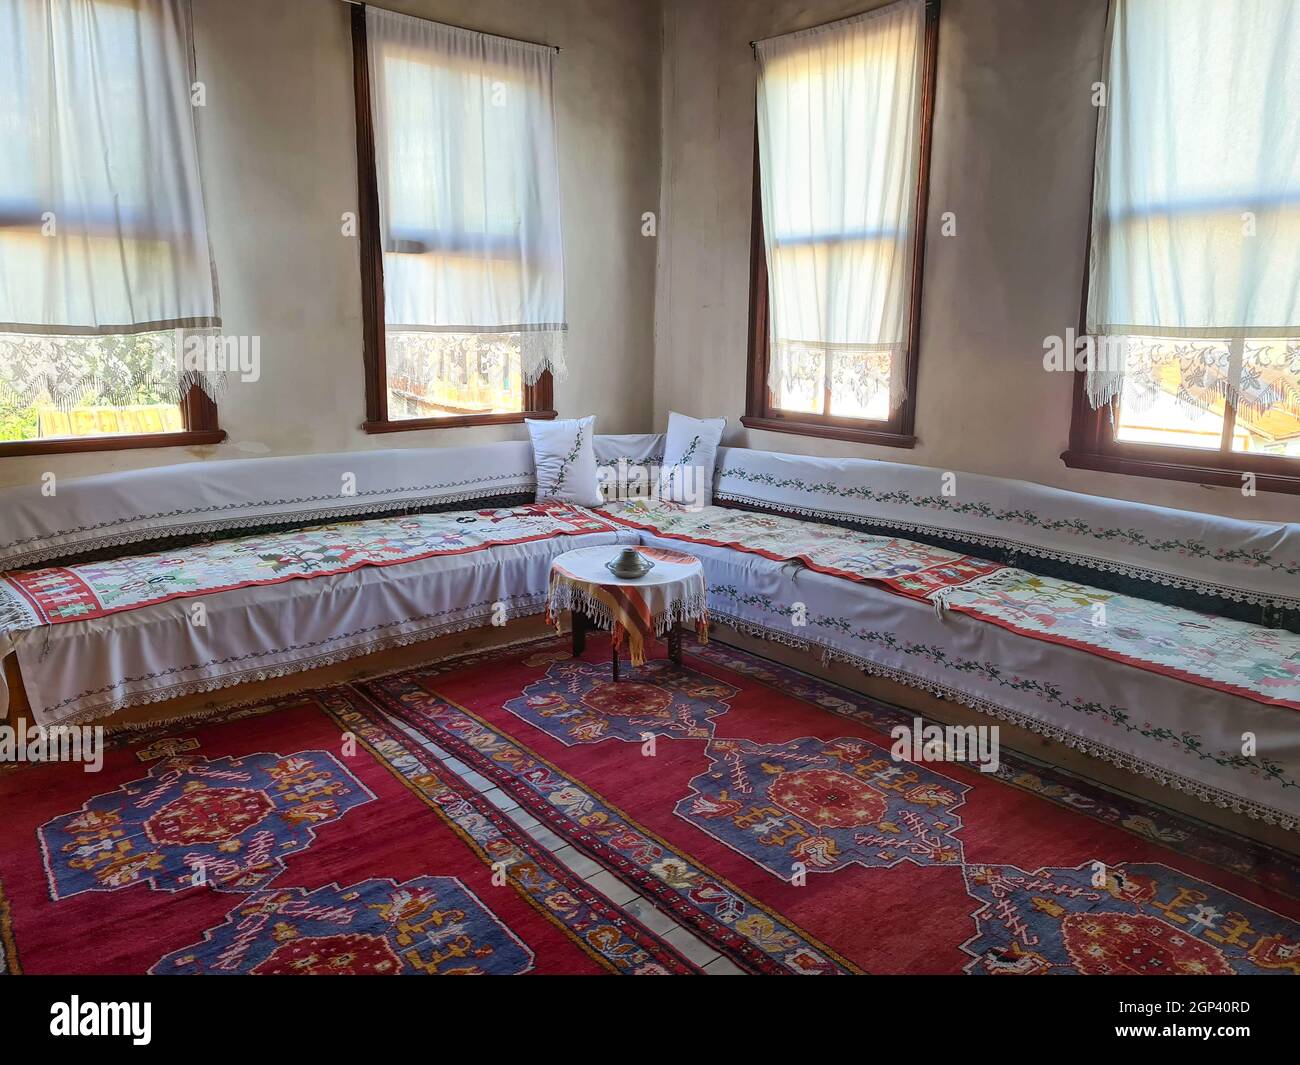 turkish carpets decoration in living room